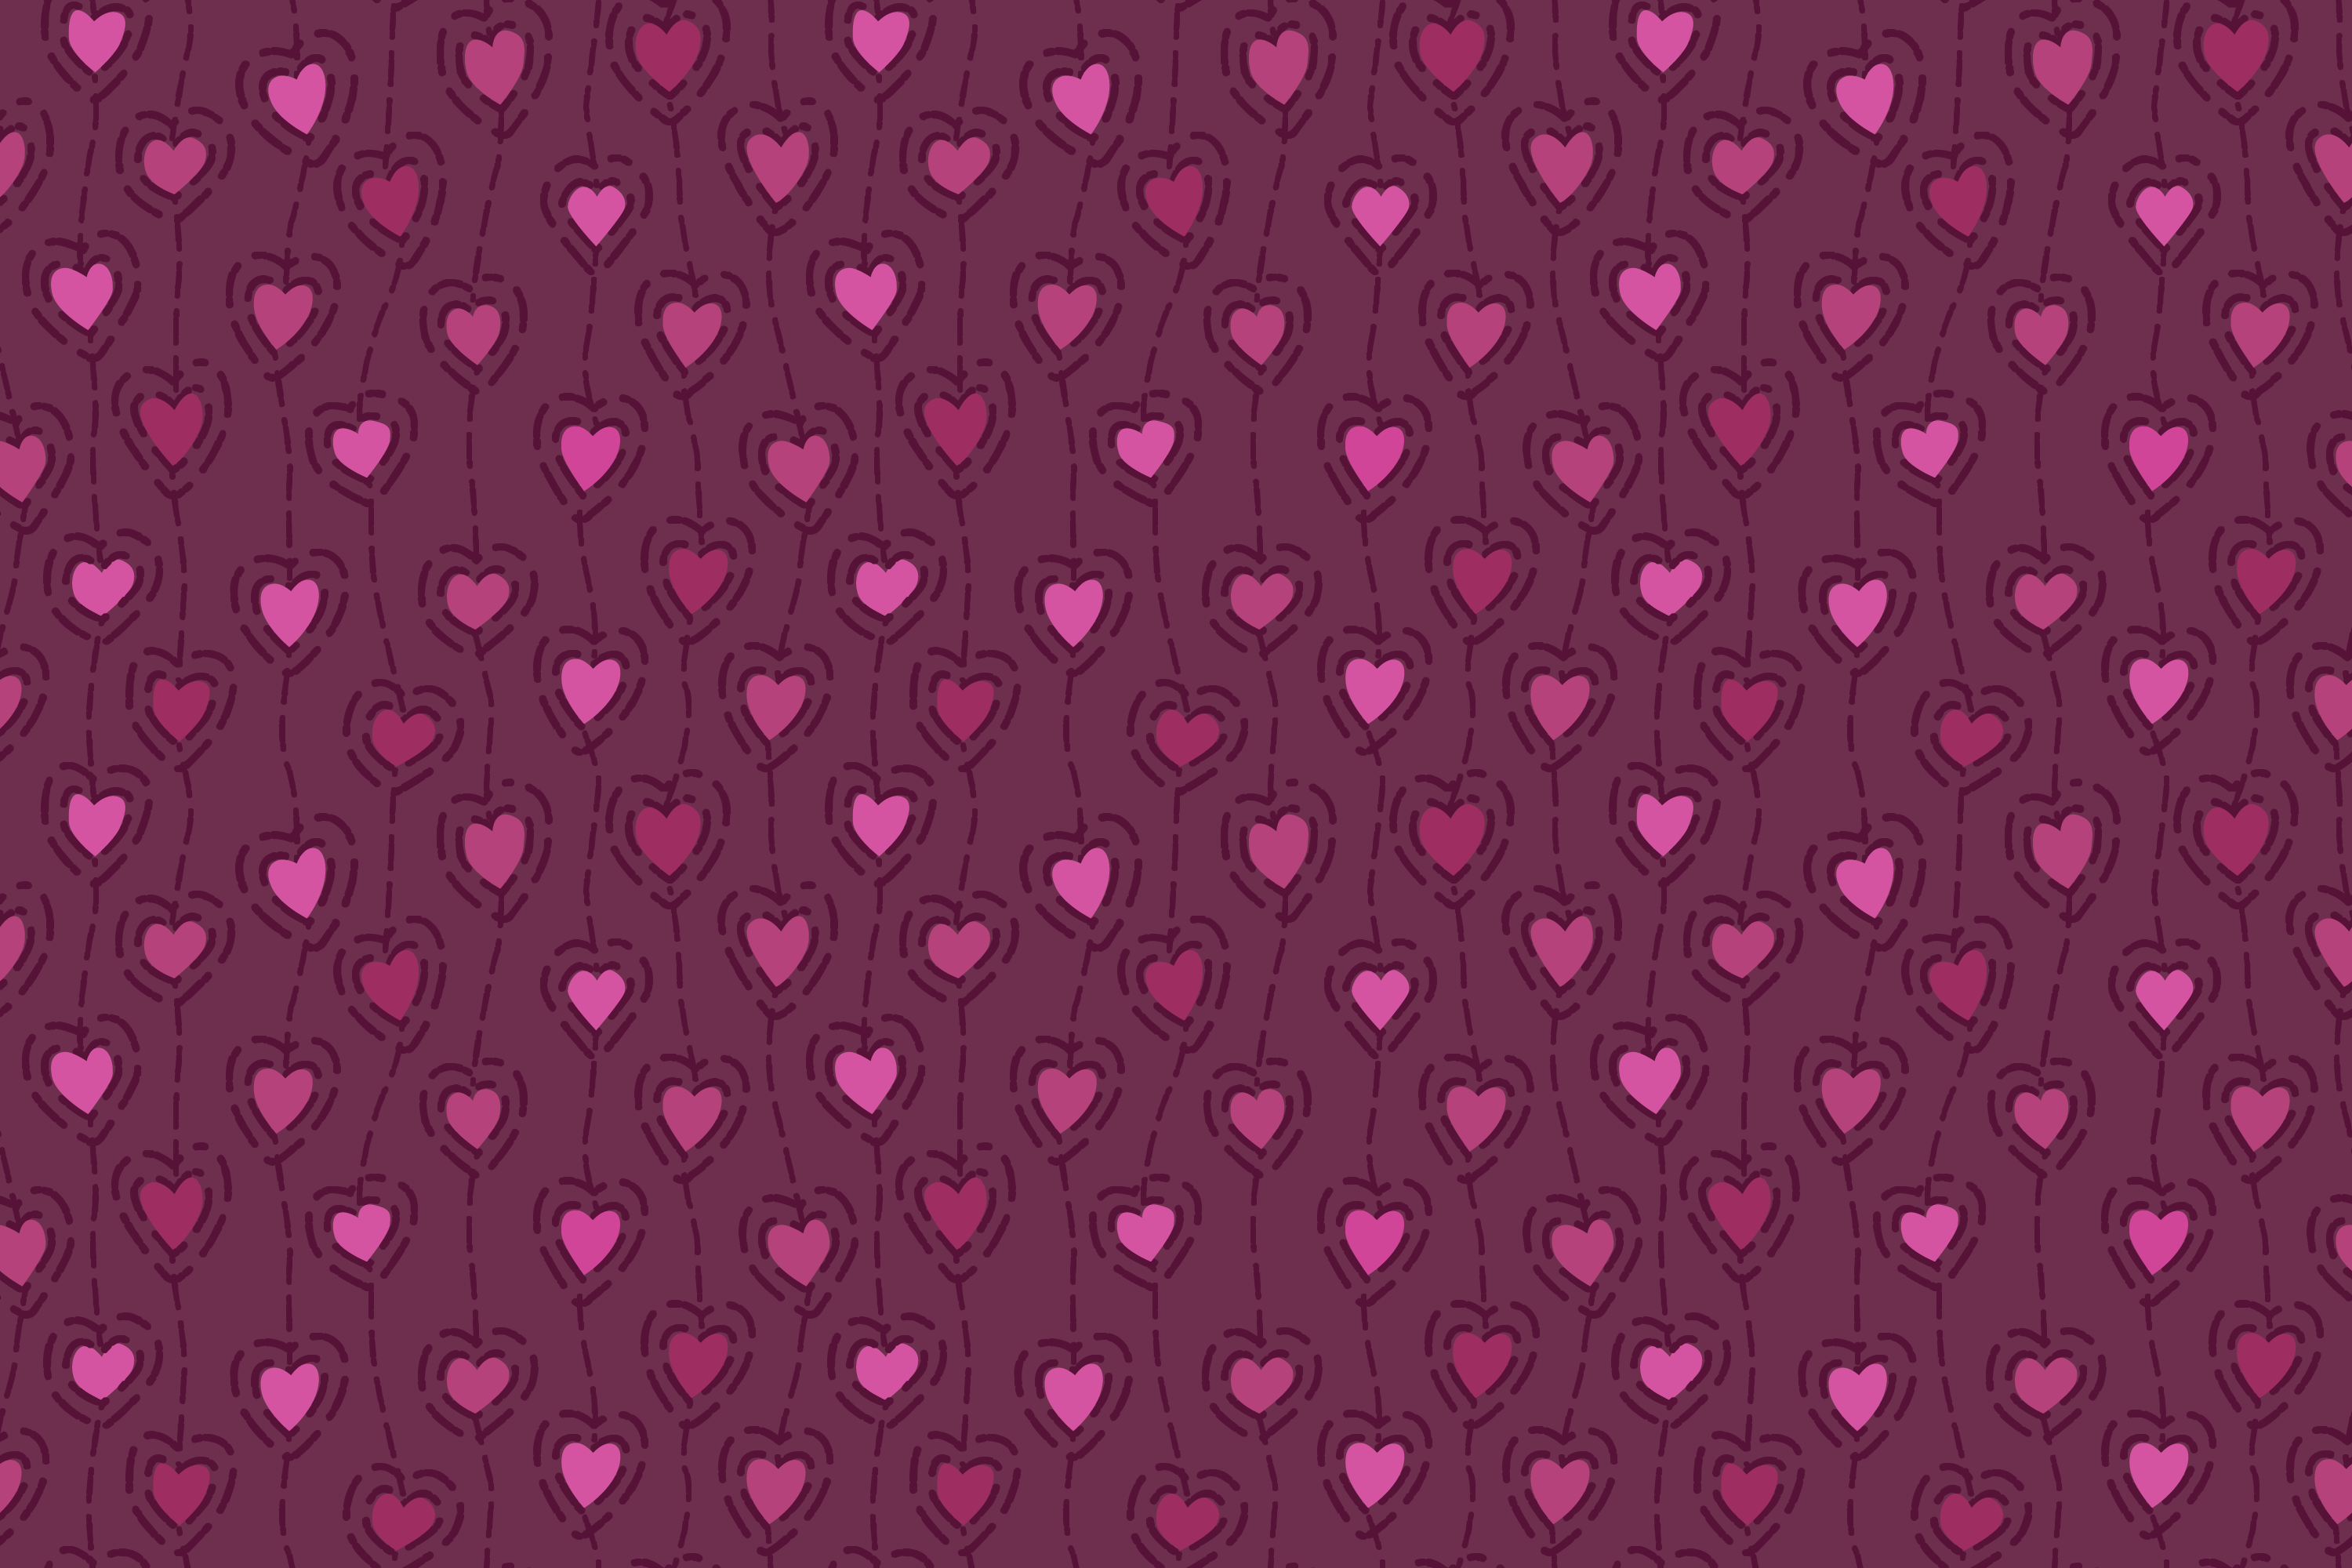 Claret hearts background wallpaper seamless